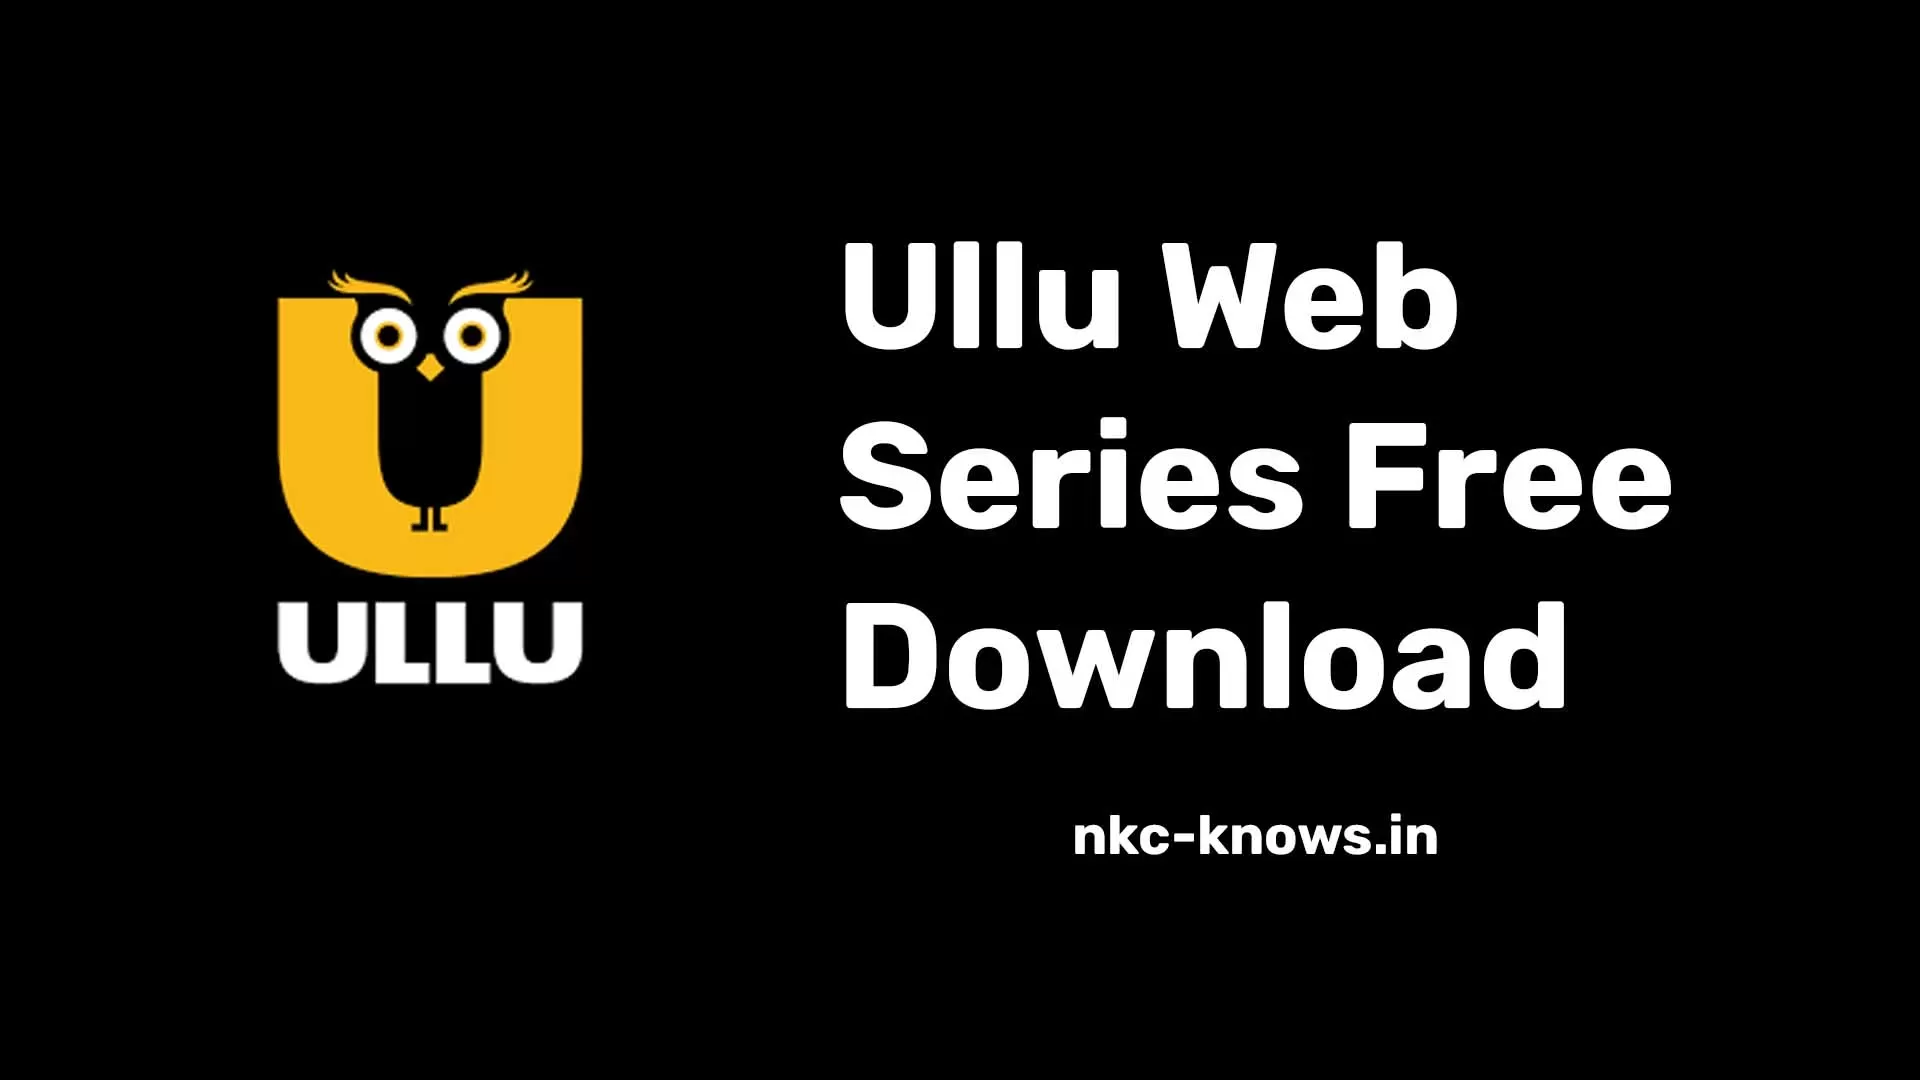 Ullu web series download free